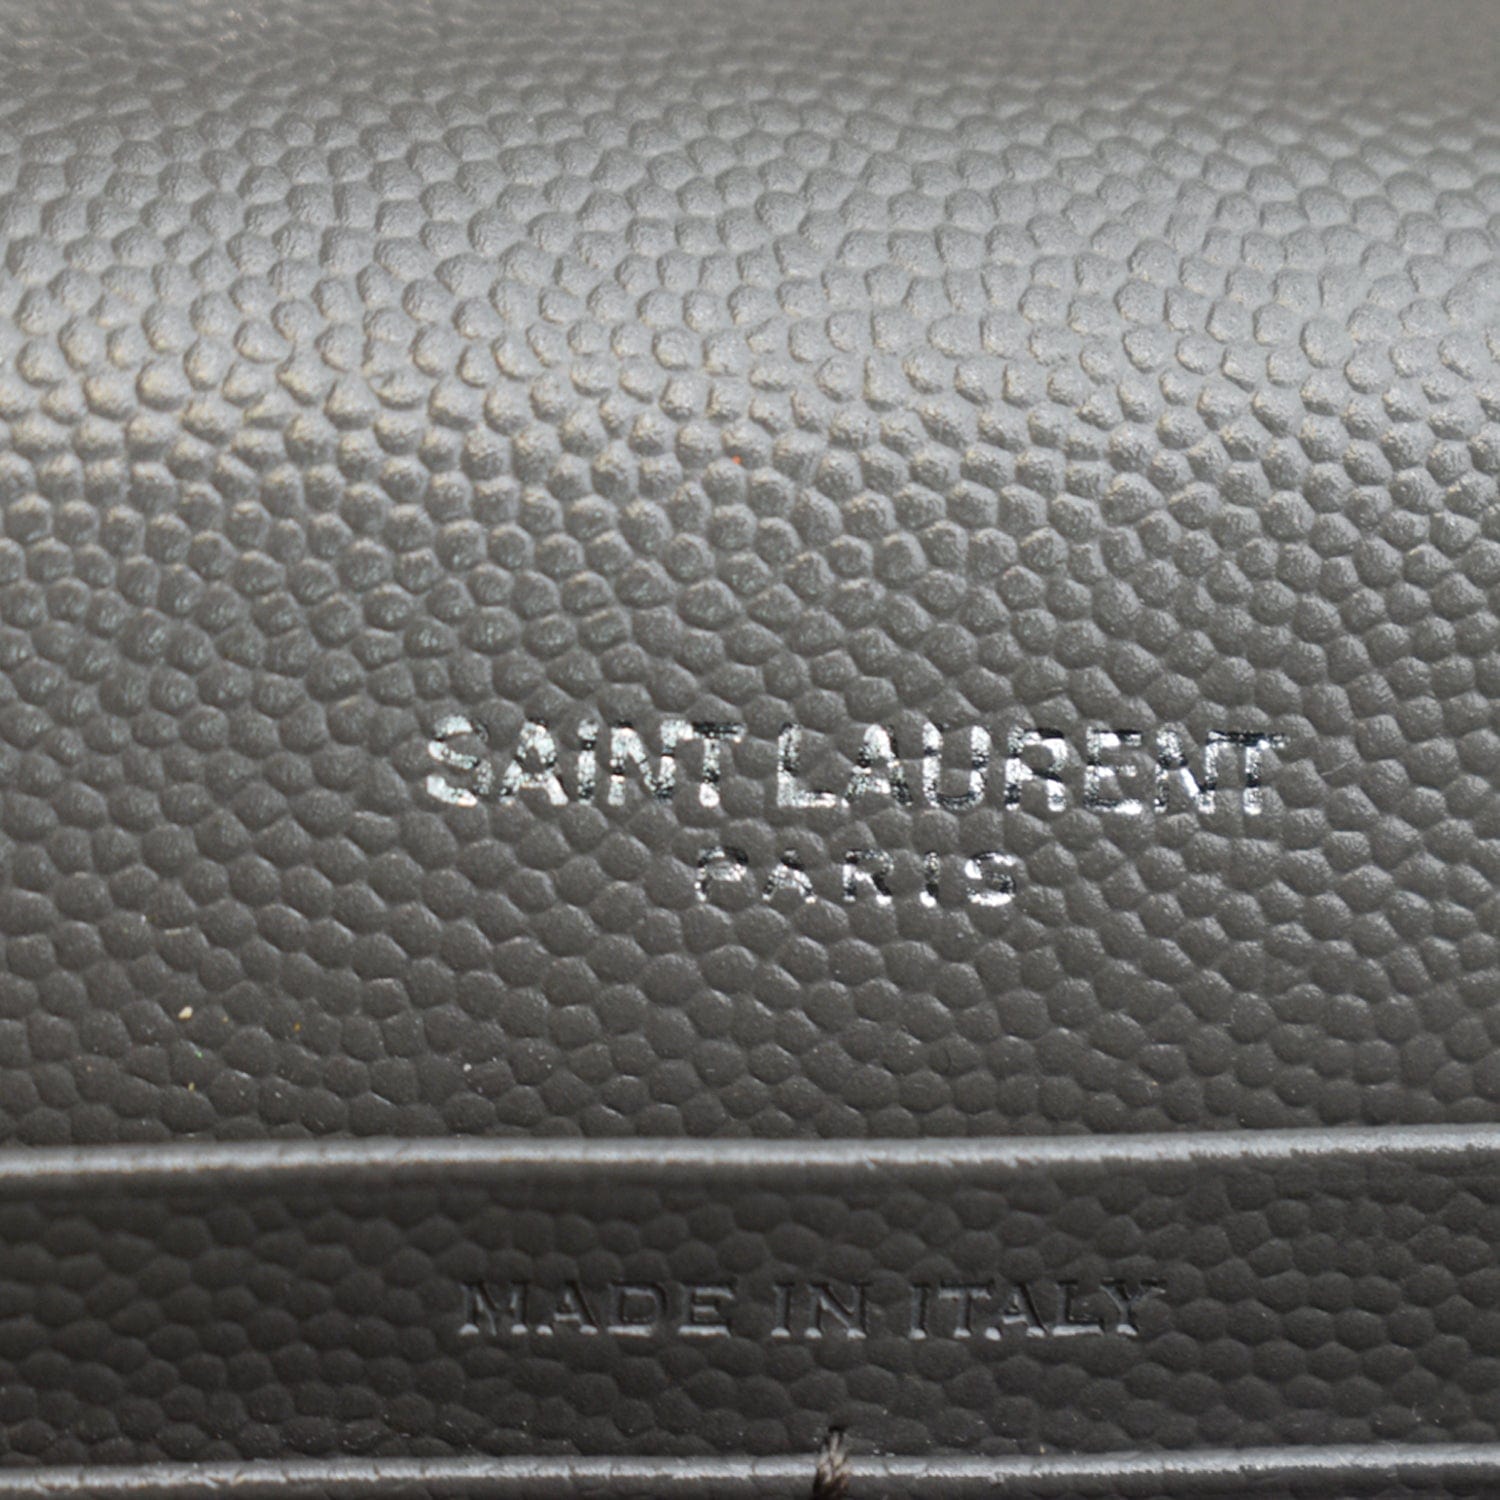 YVES SAINT LAURENT Small Kate Tassel Leather Shoulder Bag Grey - Hot D